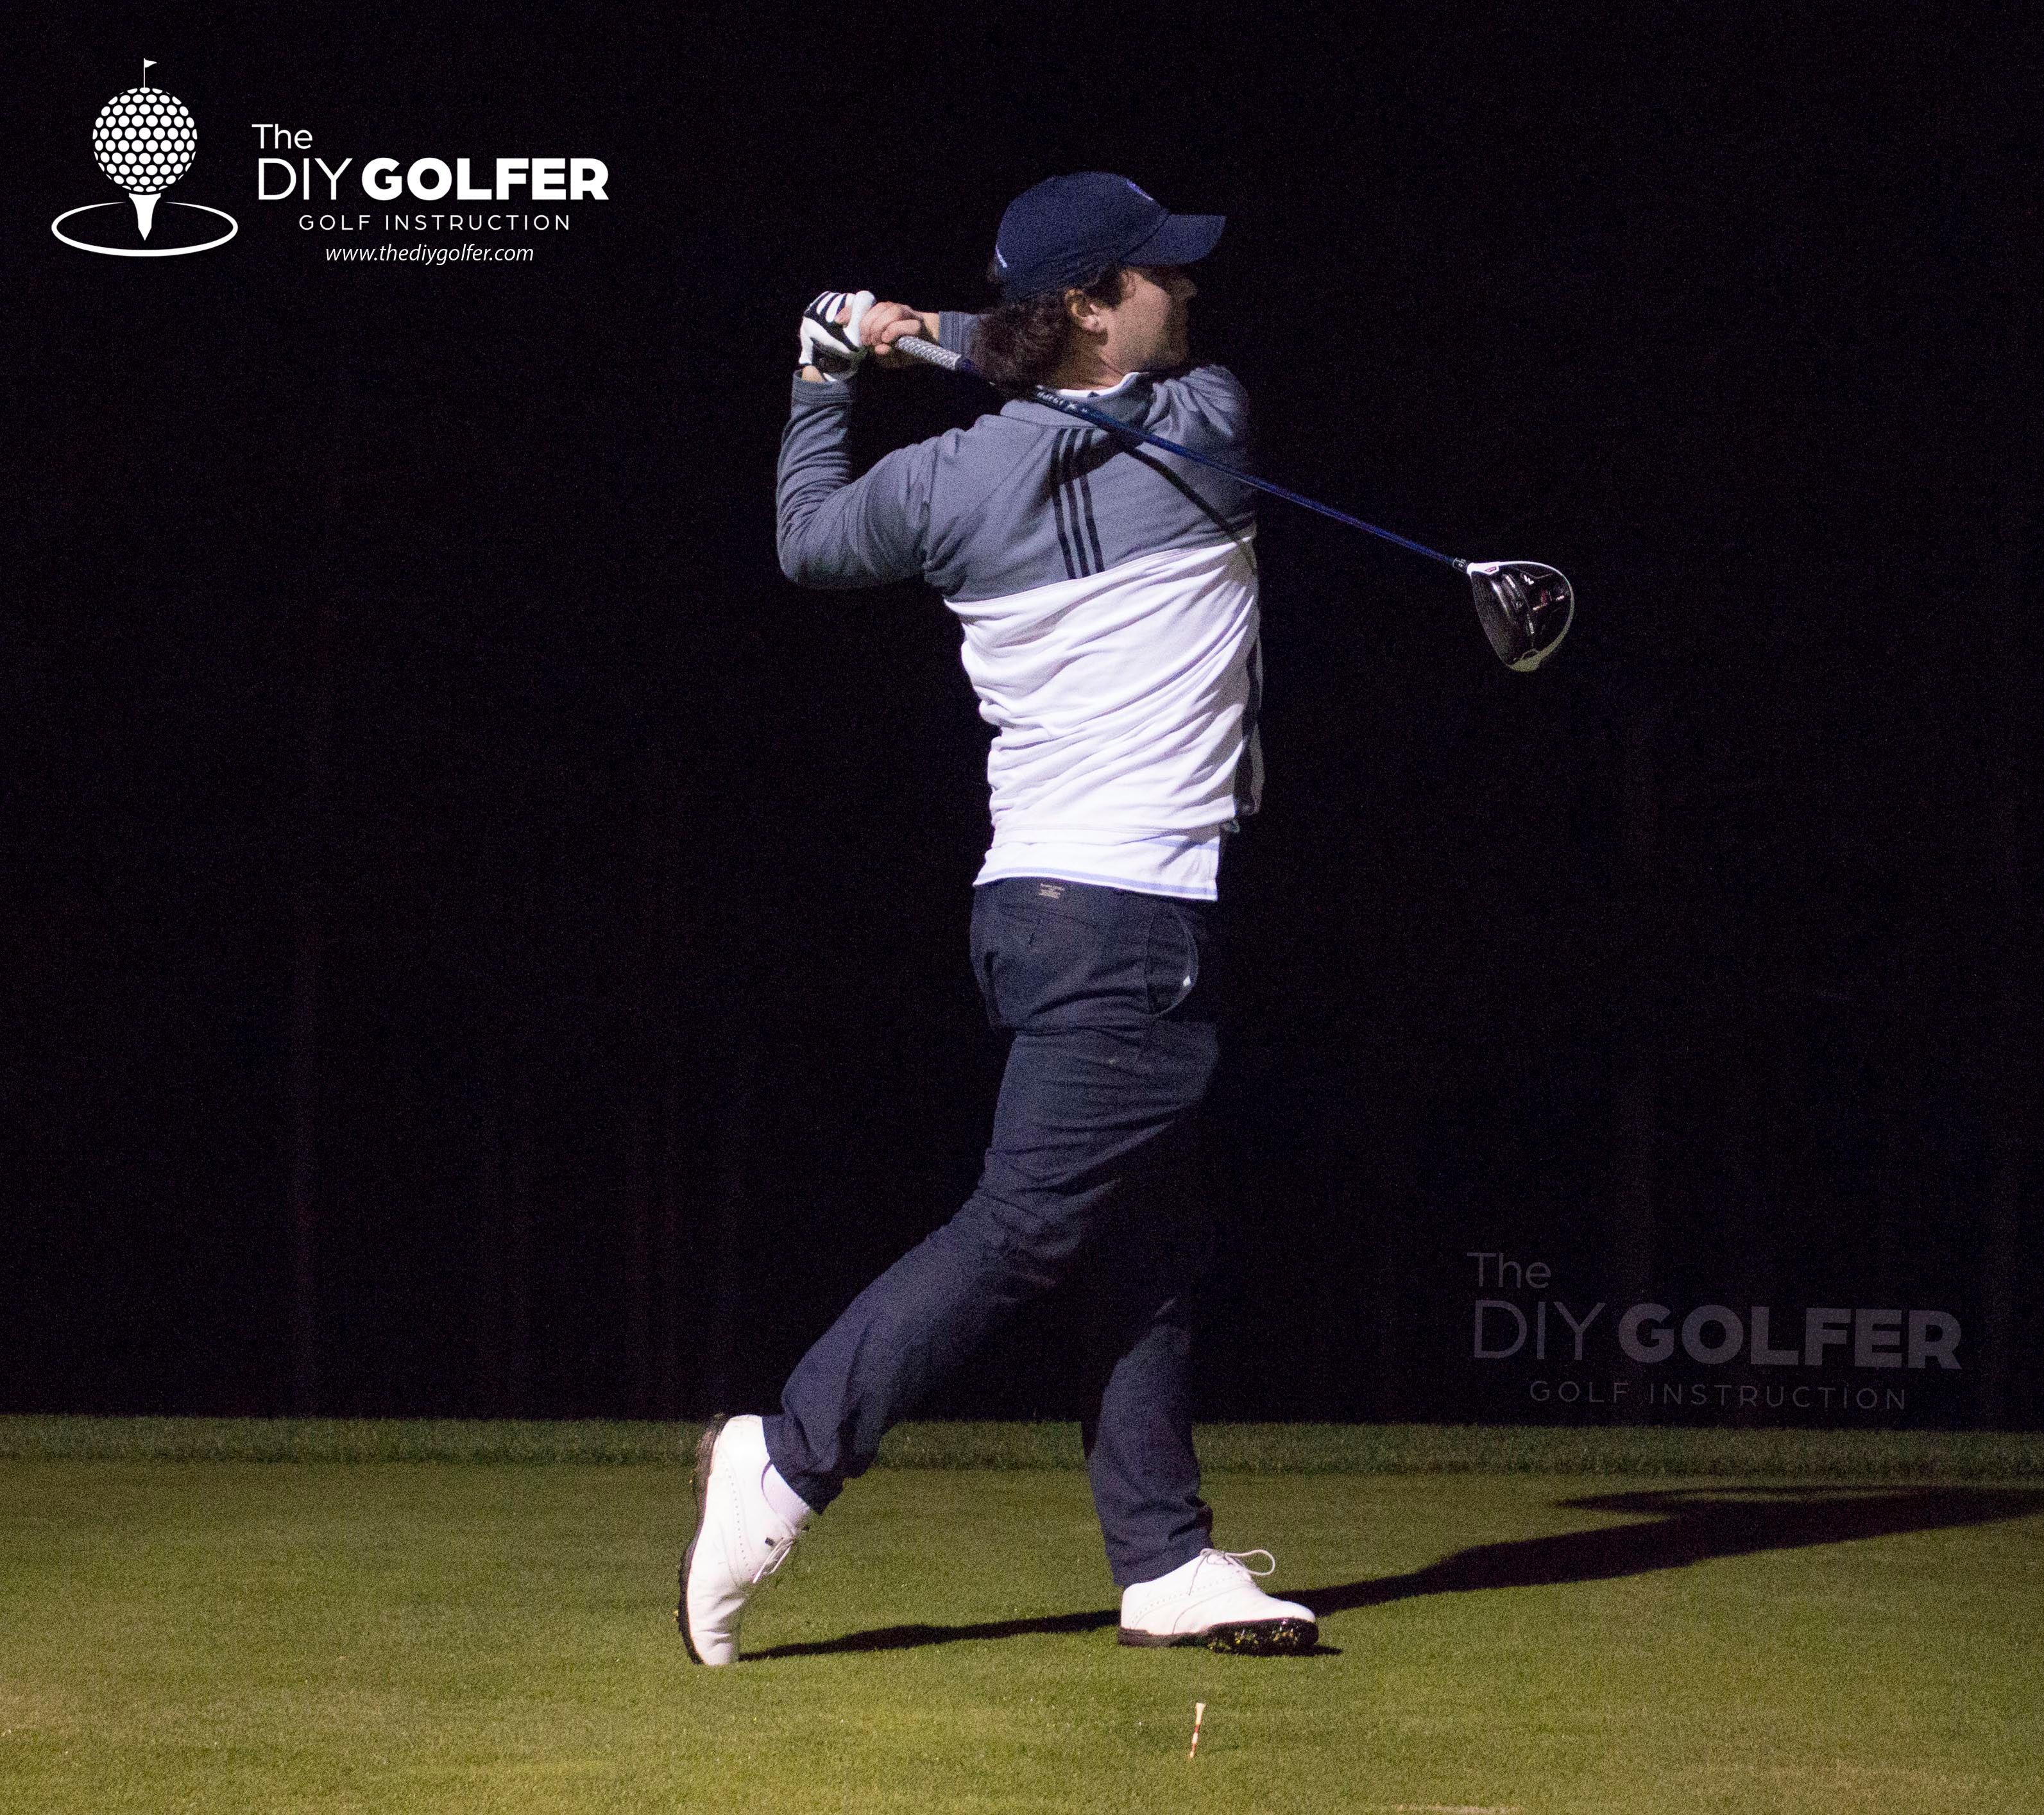 Night Golf Swing Photo: Finish Position FO